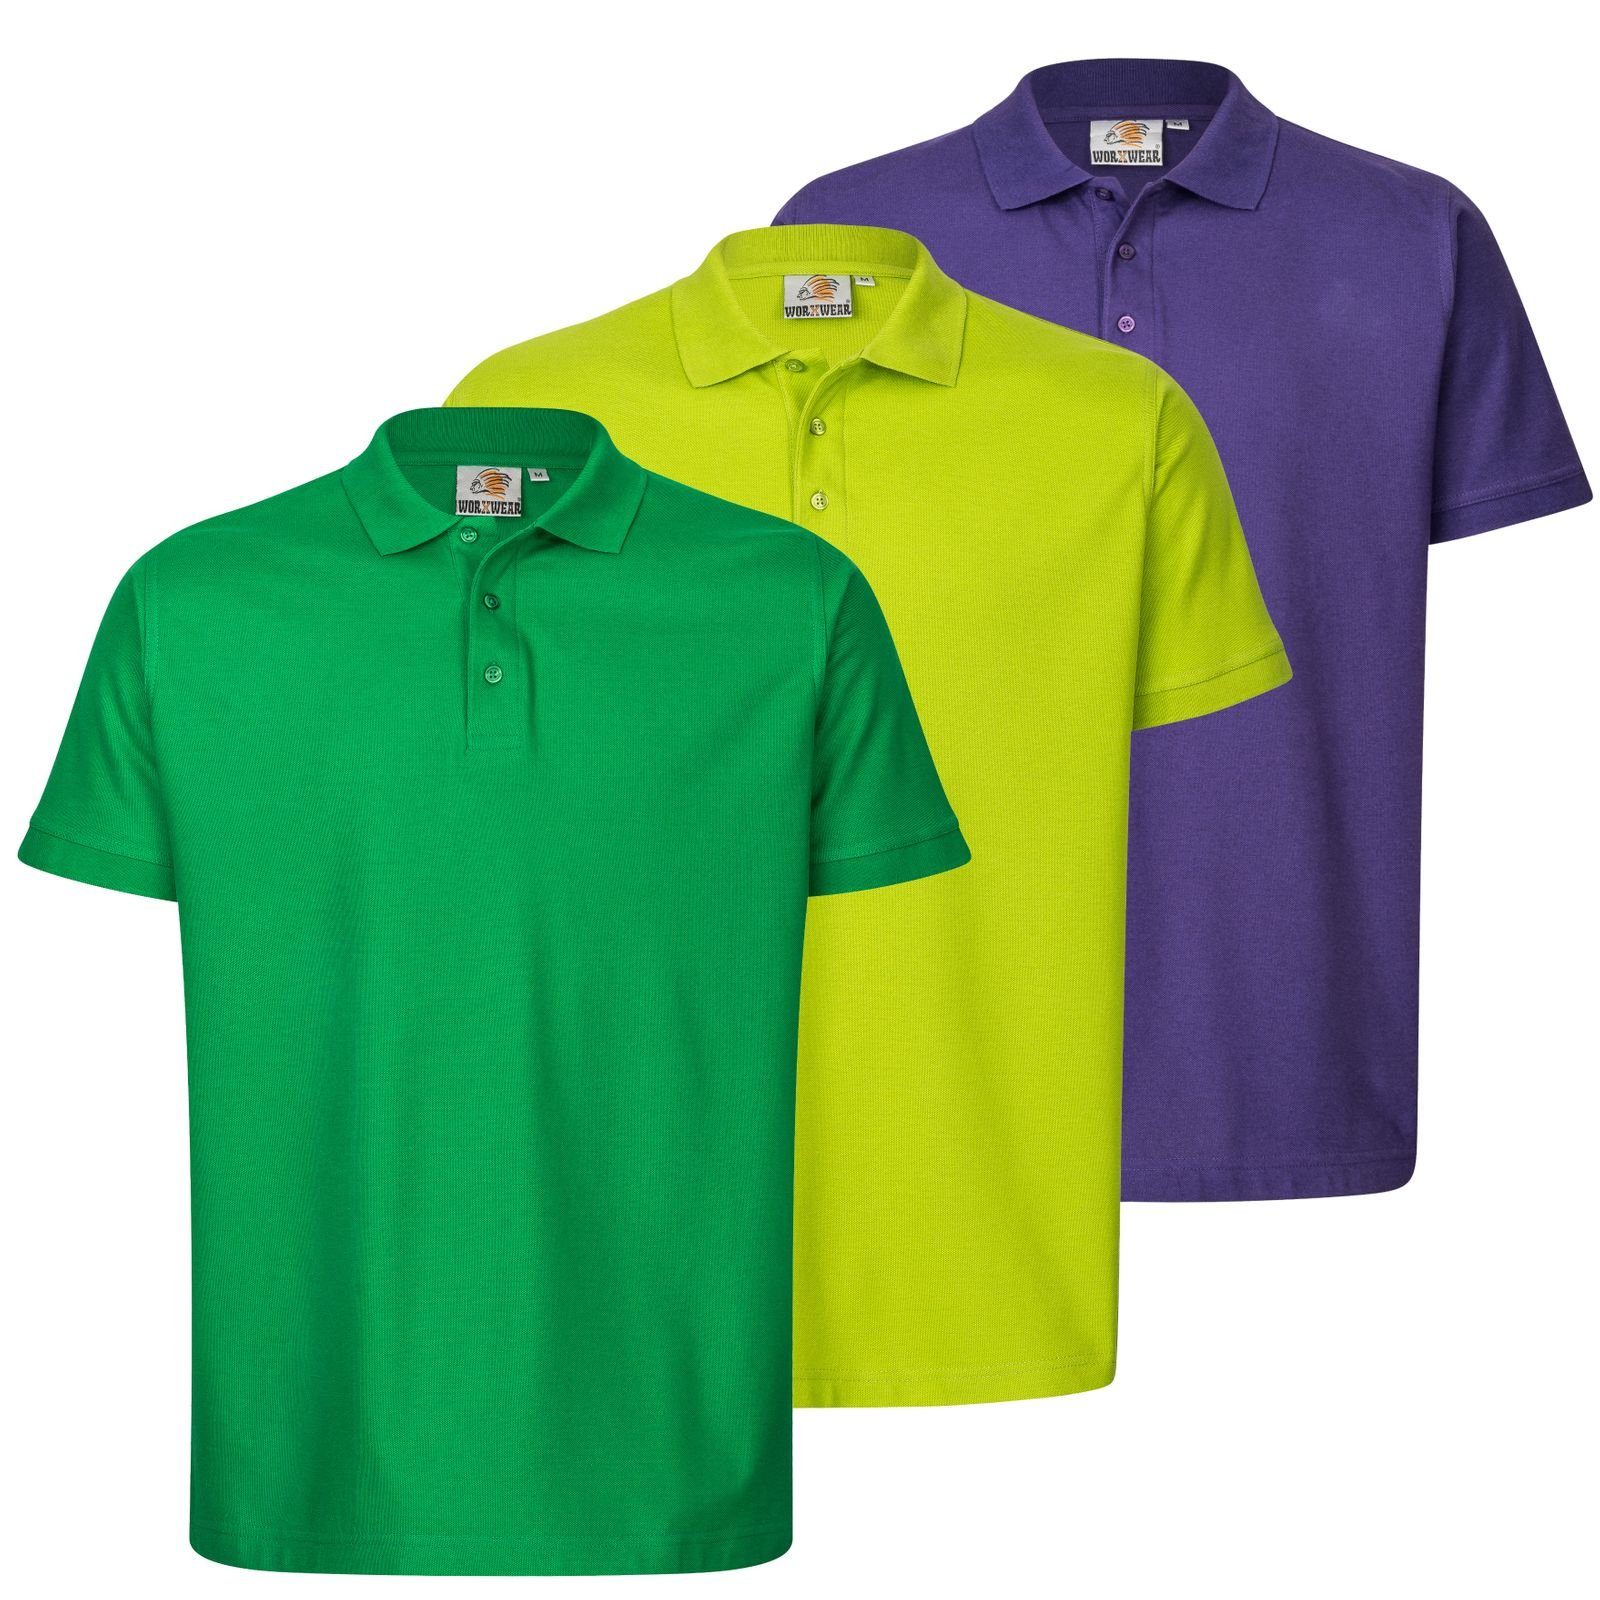 WORXWEAR Poloshirt Herren (Spar-Set, 3er-Pack) strapazierfähiges Poloshirt mit Einlaufwert < 5% Grün, Lila, Hellgrün